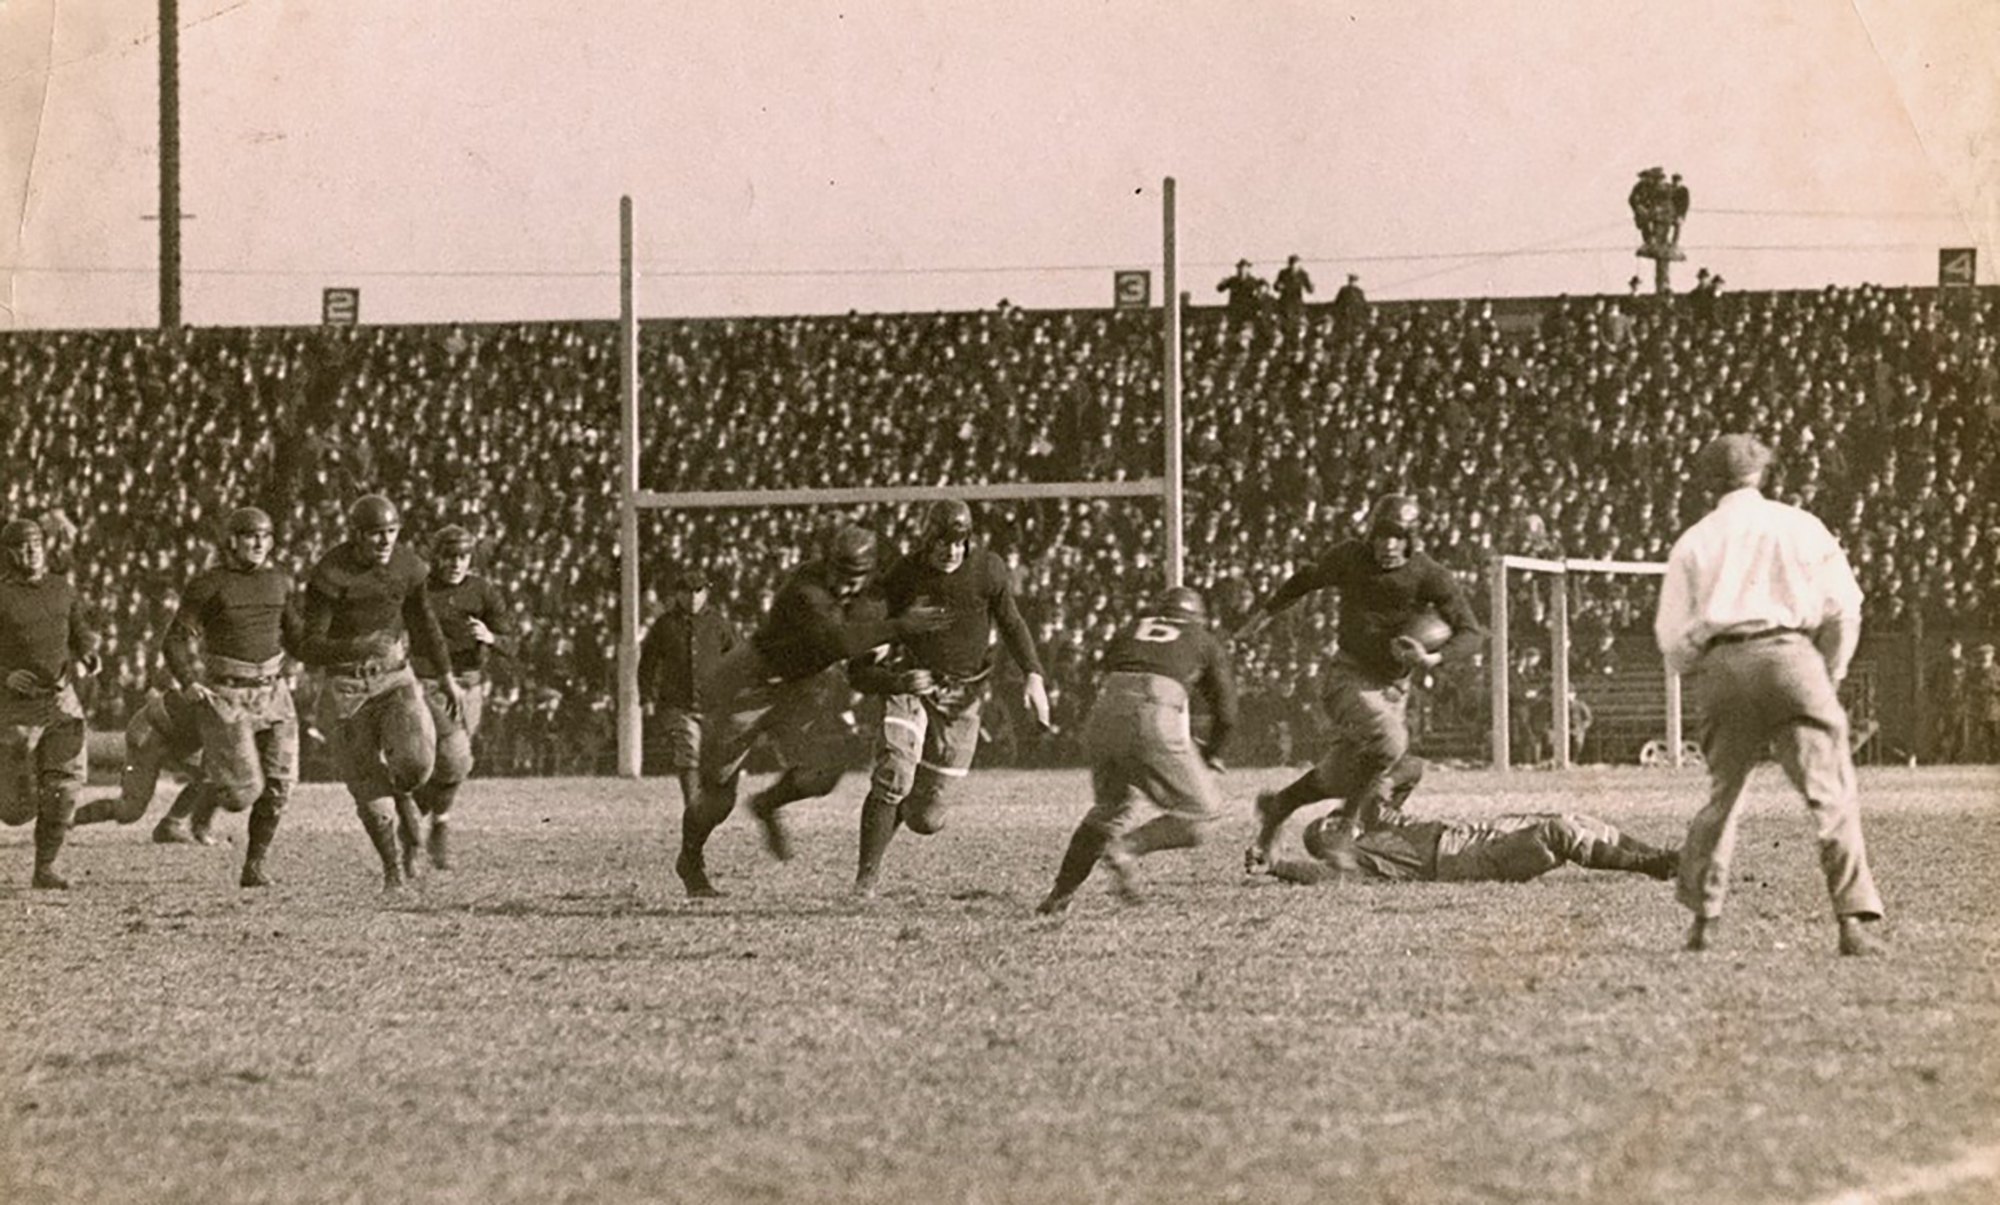 The Penn football team versus an unidentified team at Franklin Field circa 1915.